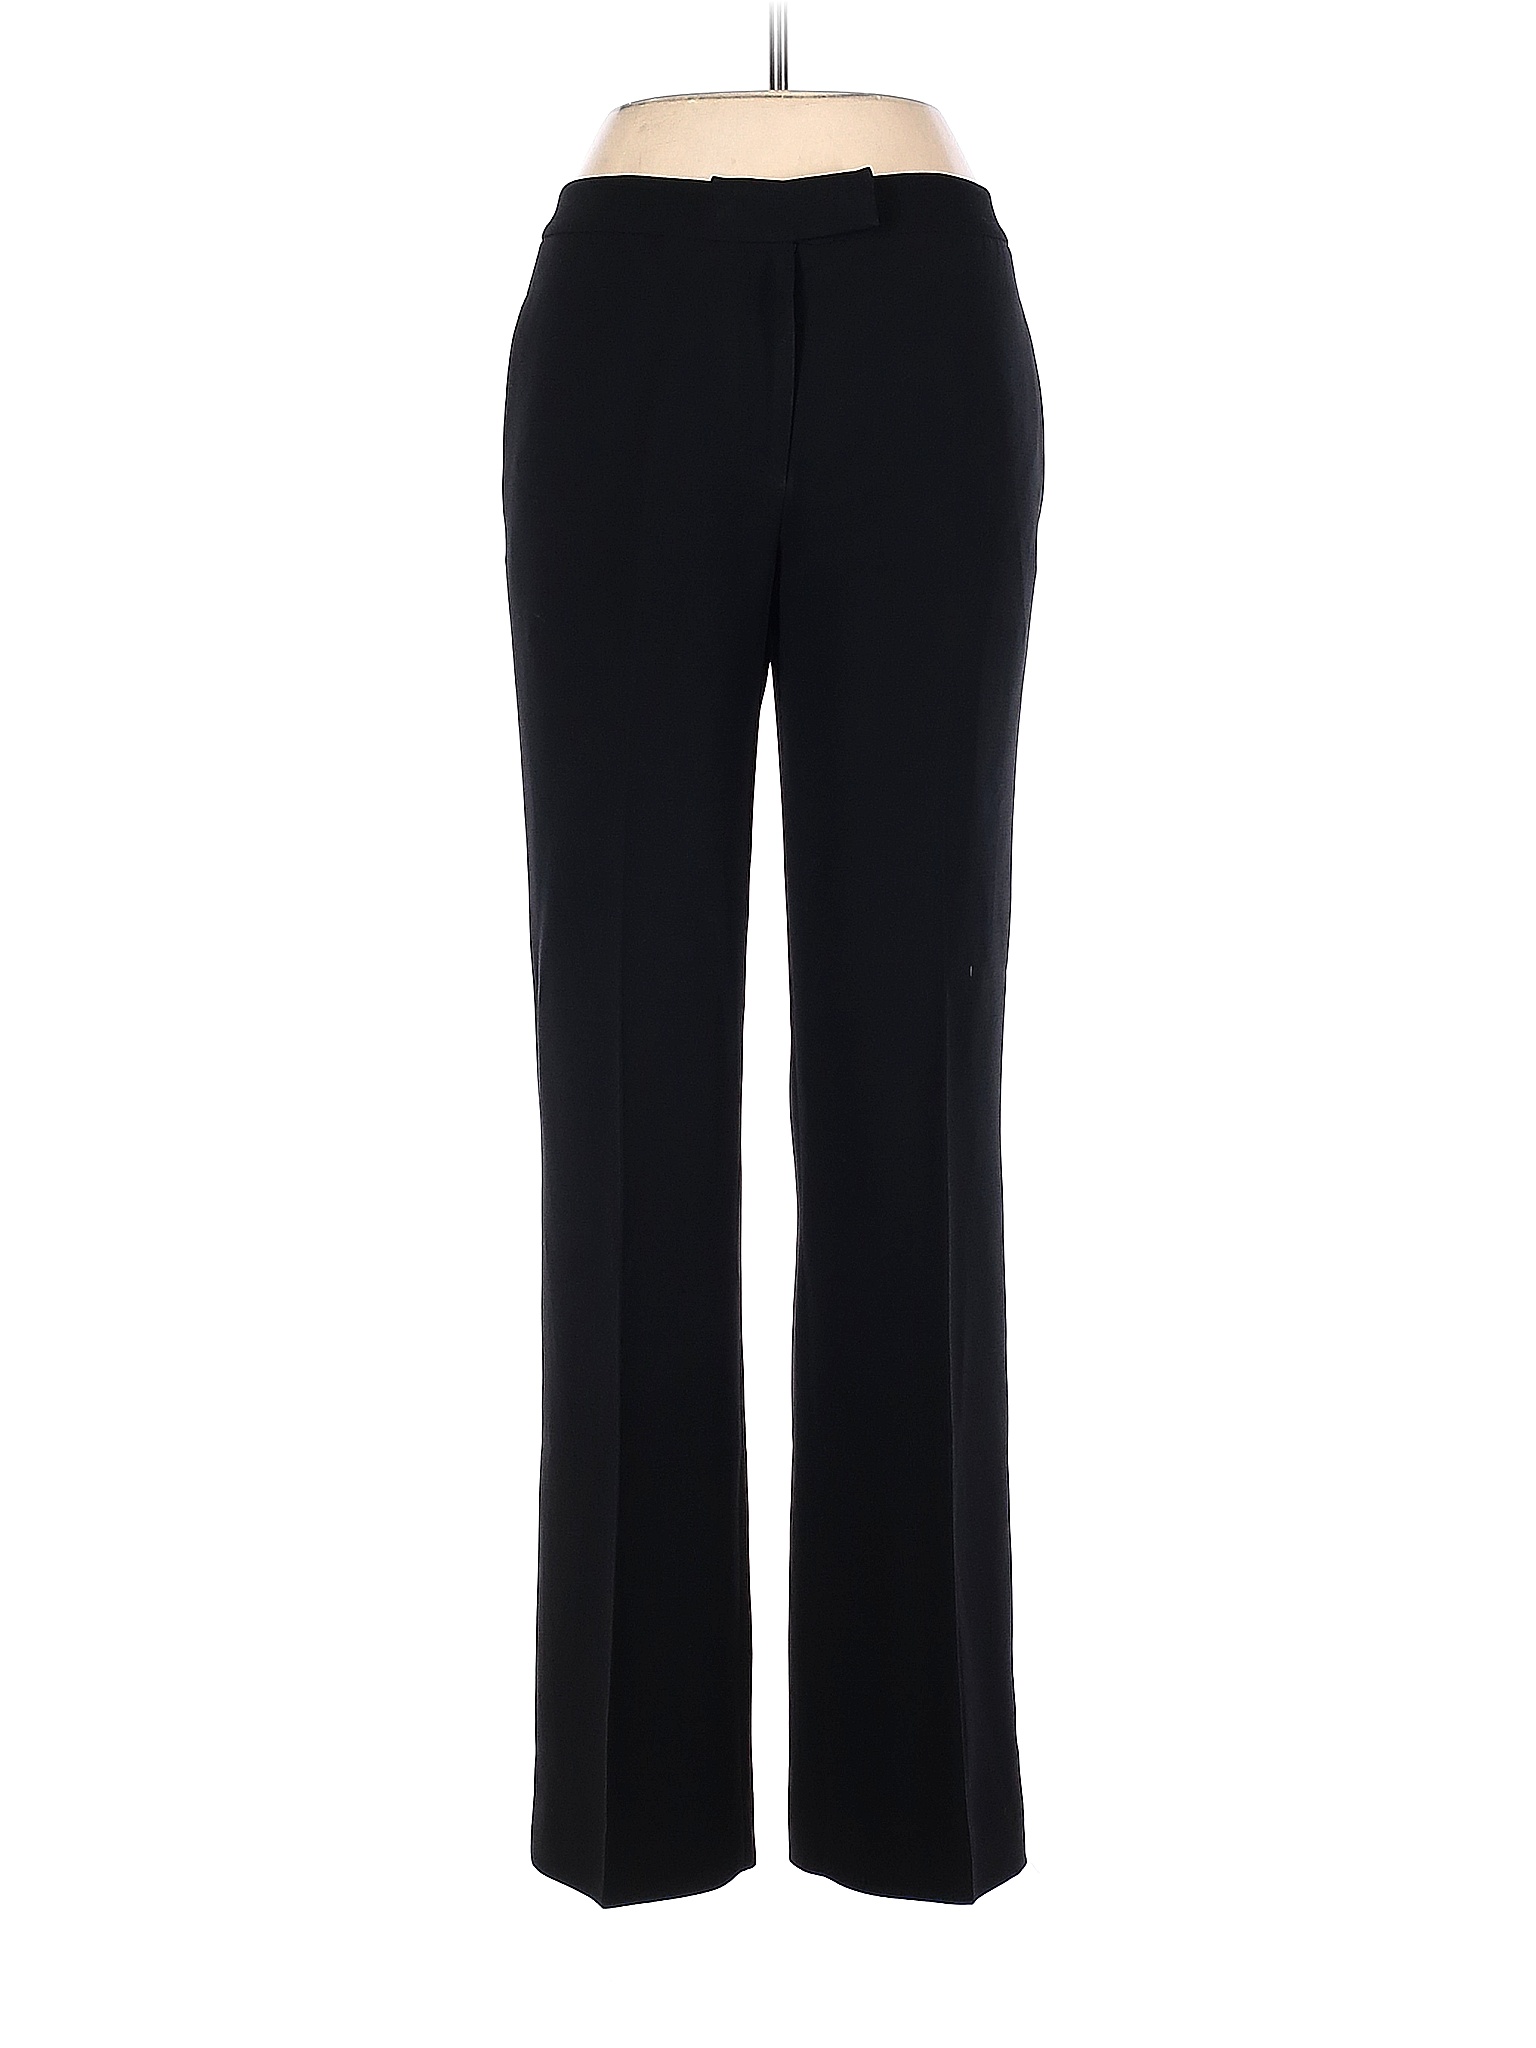 Tahari by ASL 100% Polyester Black Dress Pants Size 6 - 85% off | thredUP